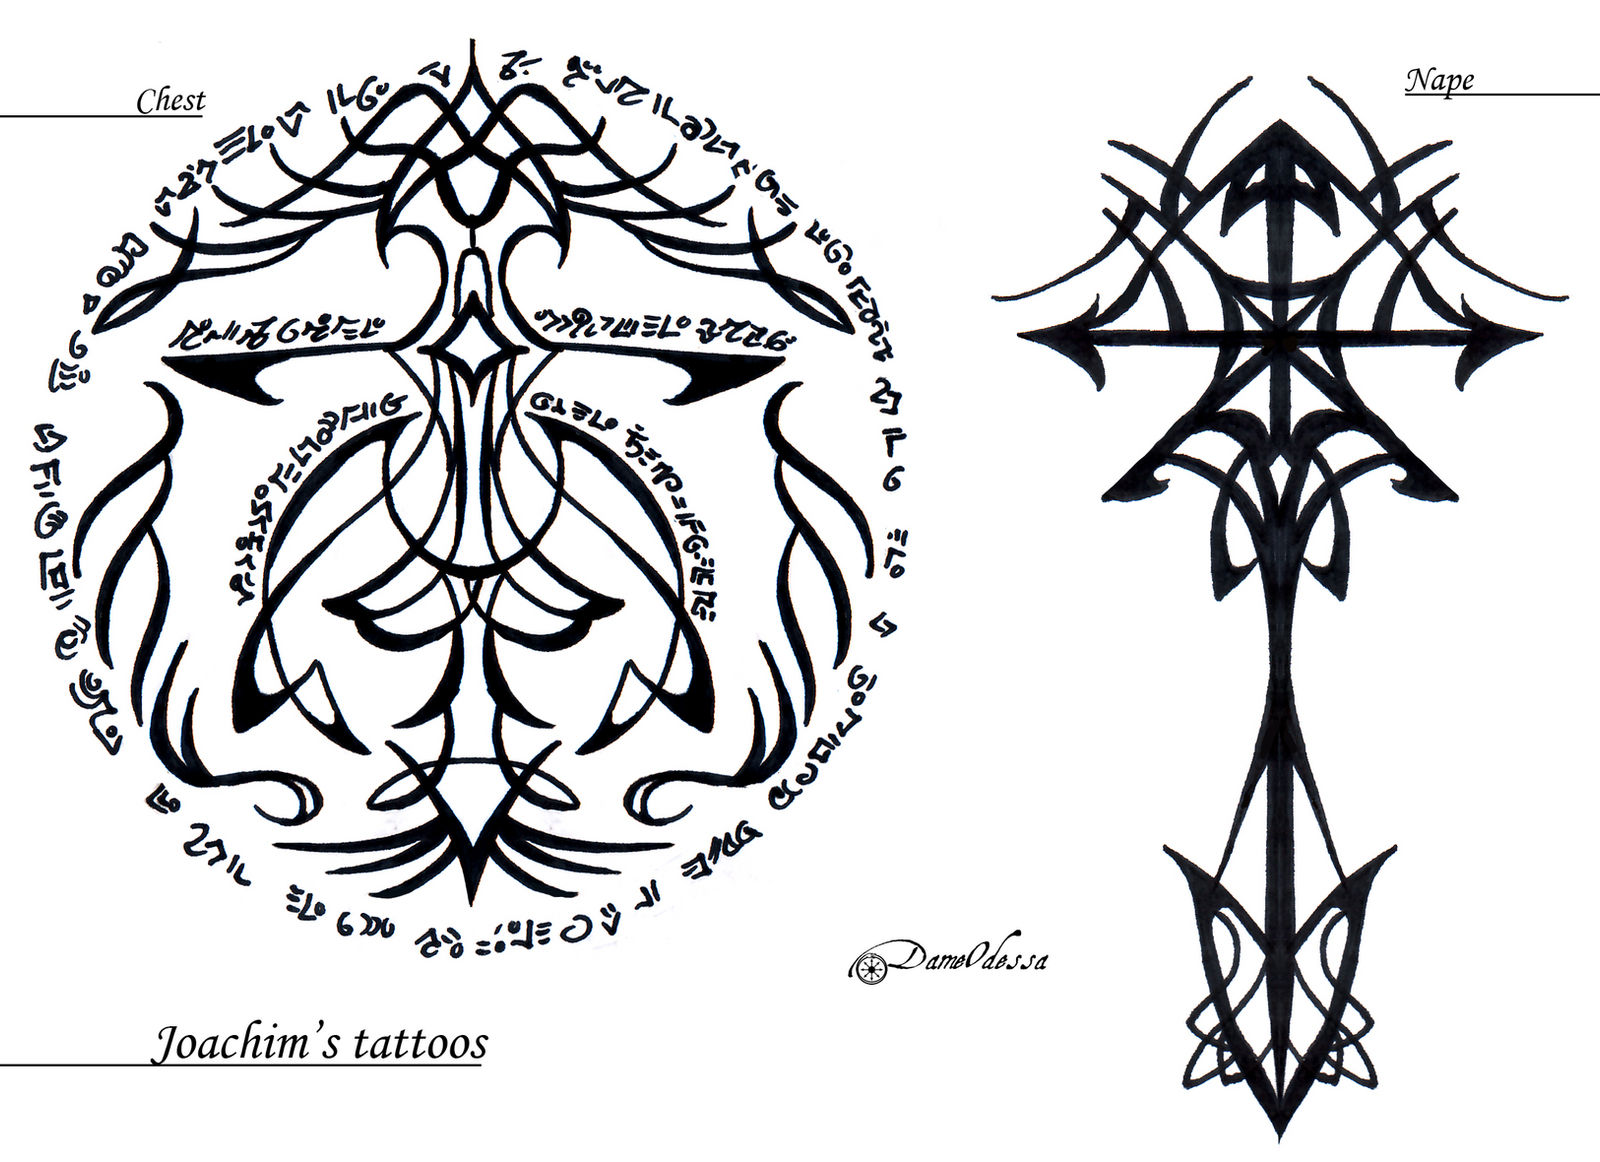 Concept - Joachim's tattoos